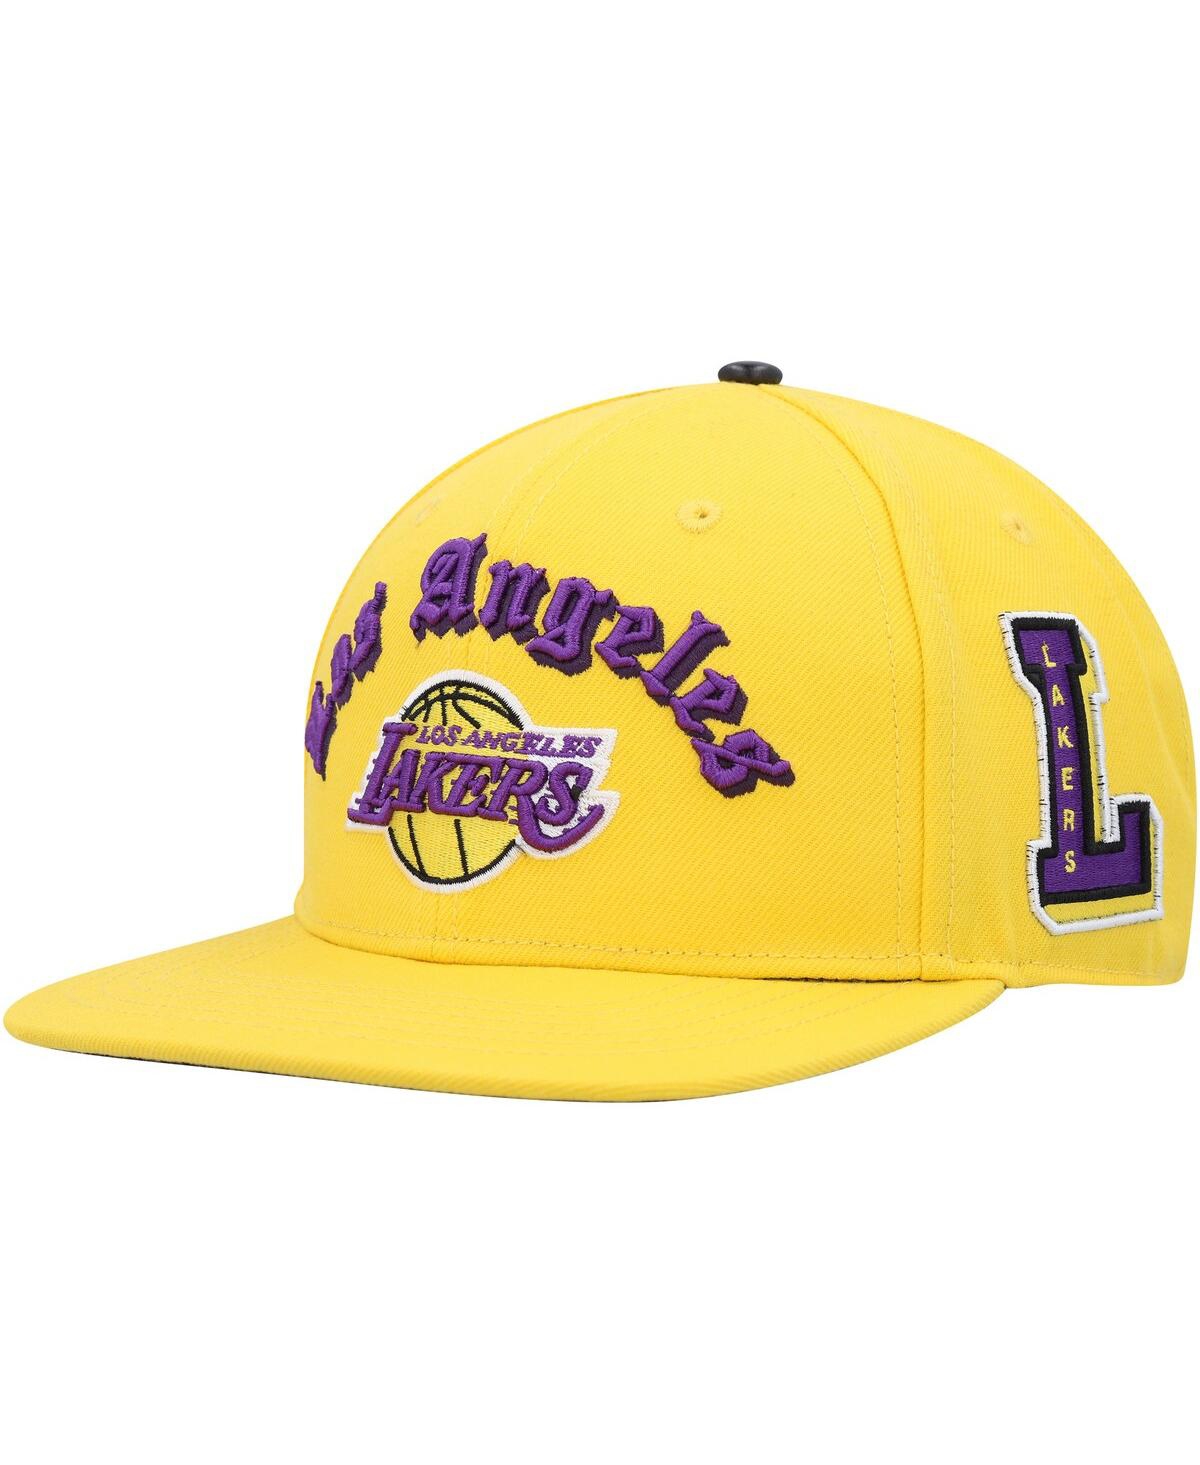 Shop Pro Standard Men's  Gold Los Angeles Lakers Old English Snapback Hat